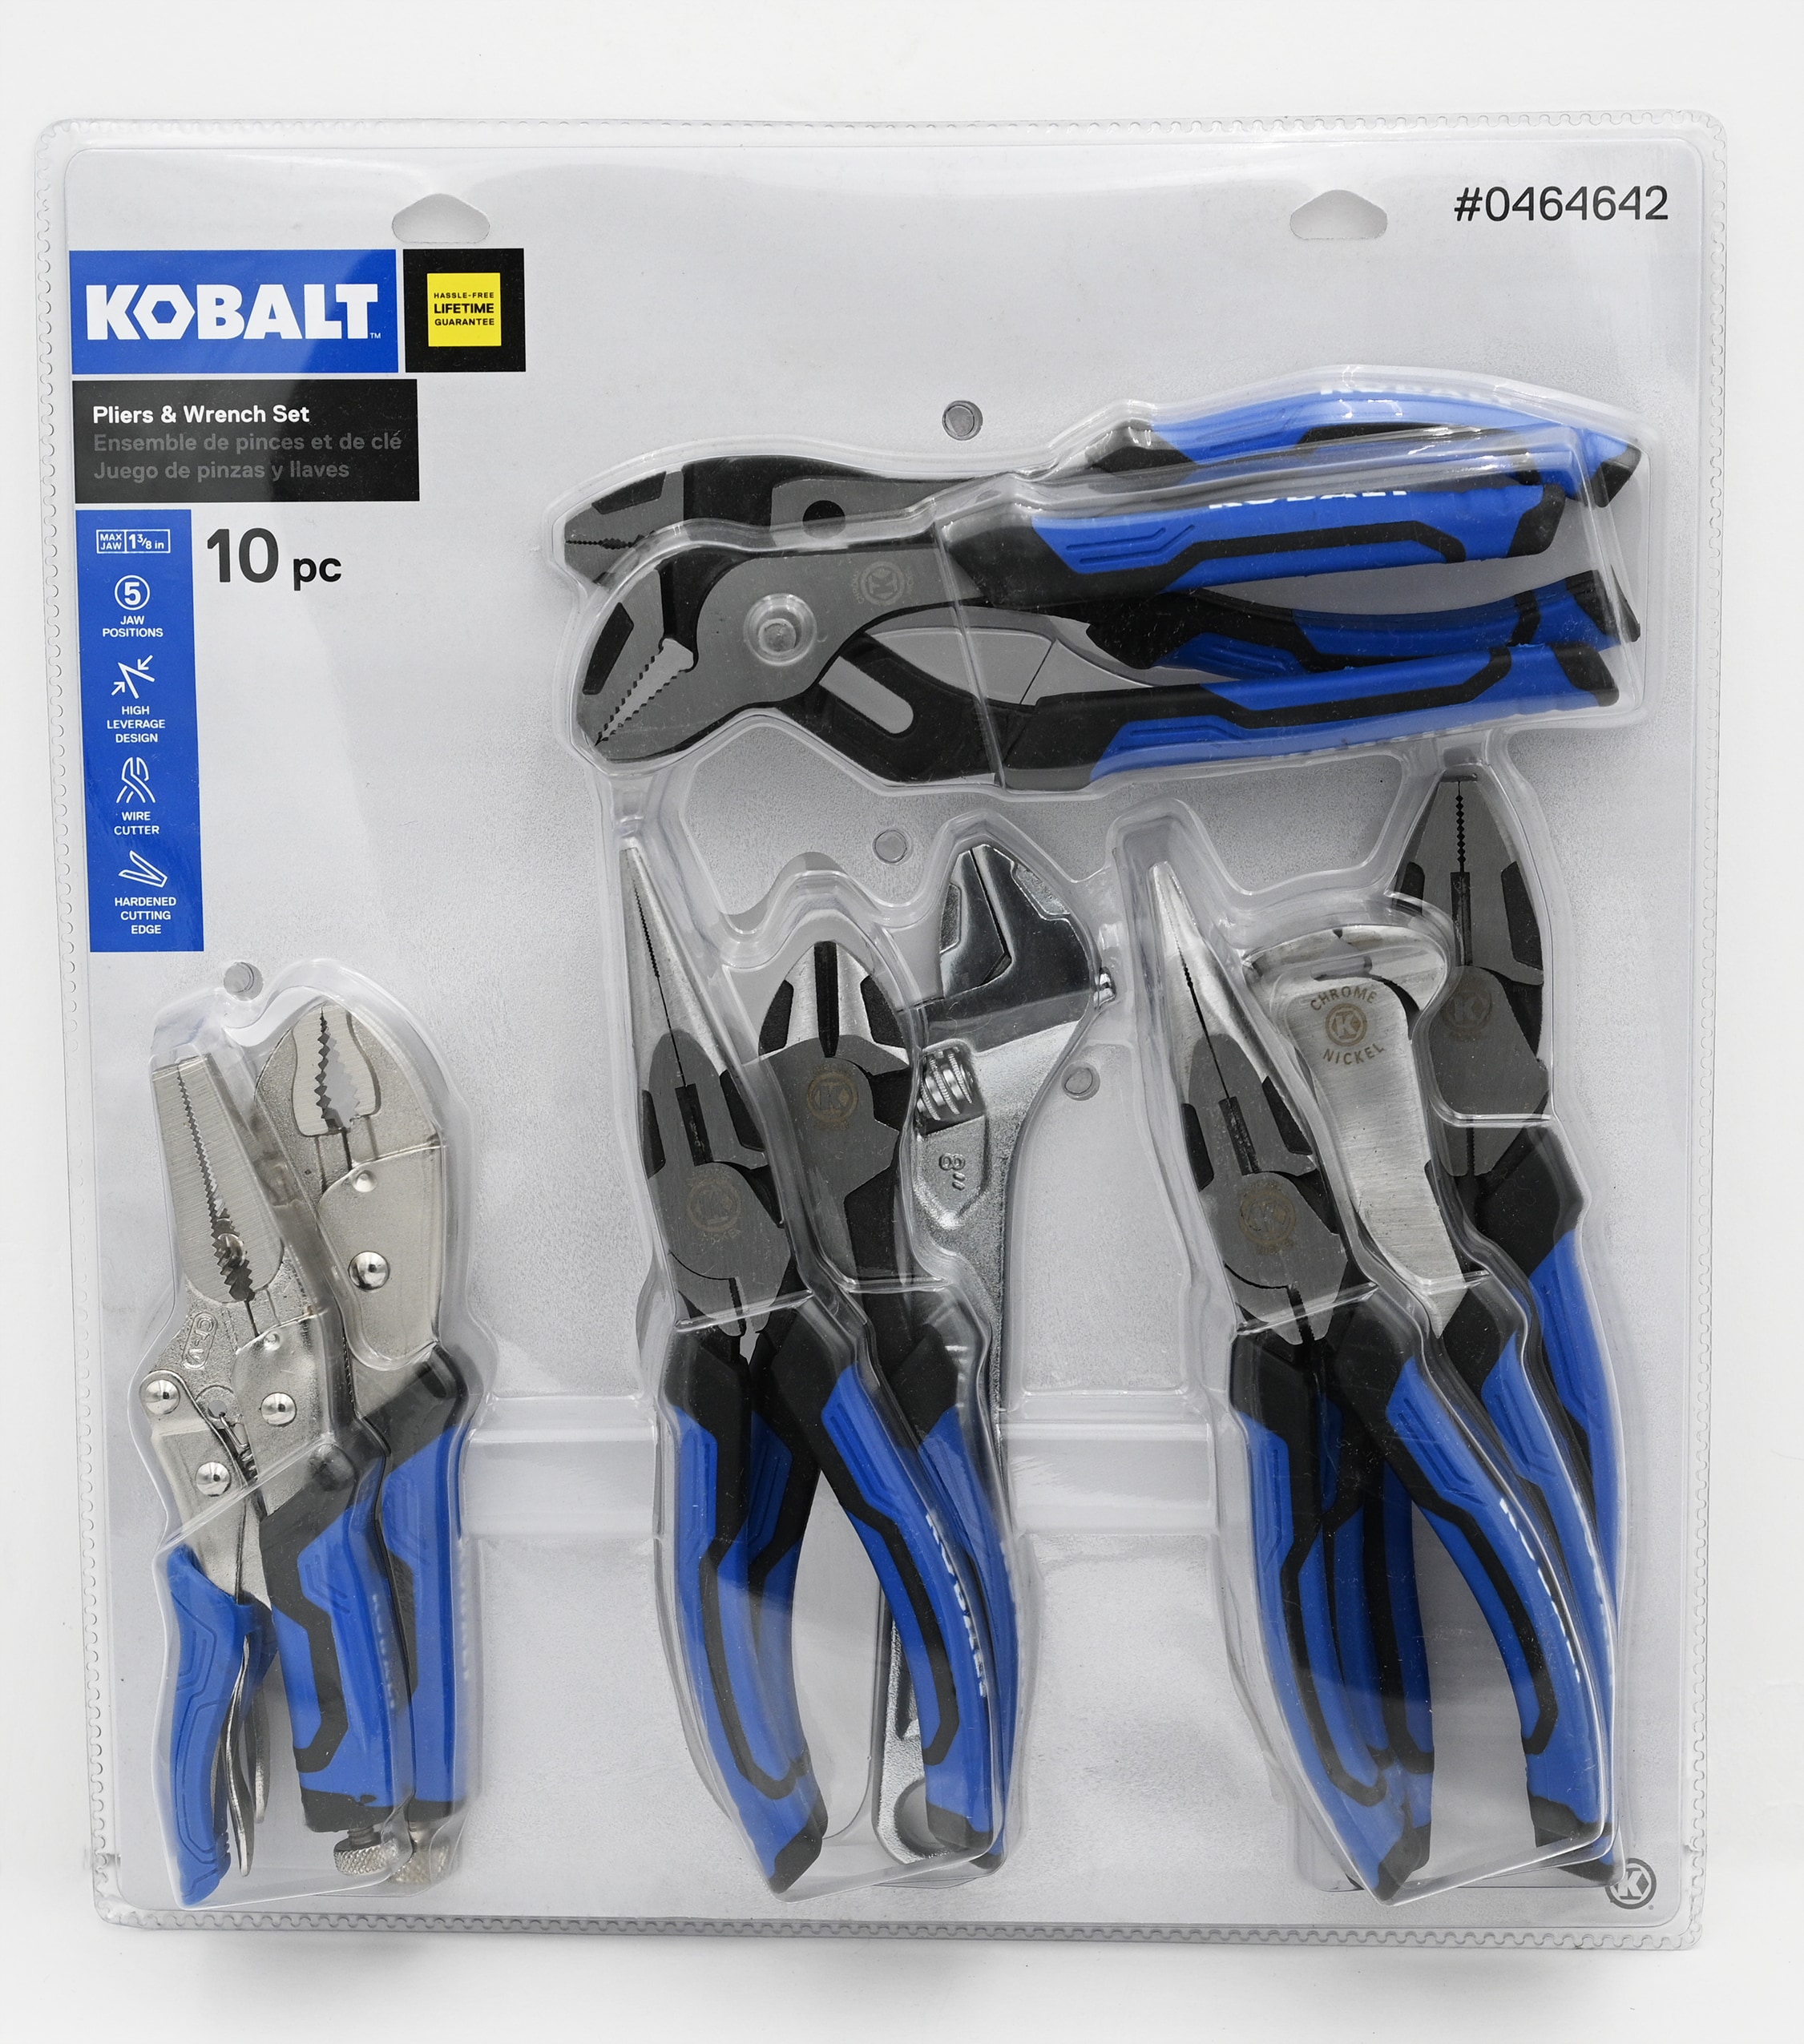 KOBAL Mini End Cutting Pliers - Lifetime Warranty - Fast Shipping